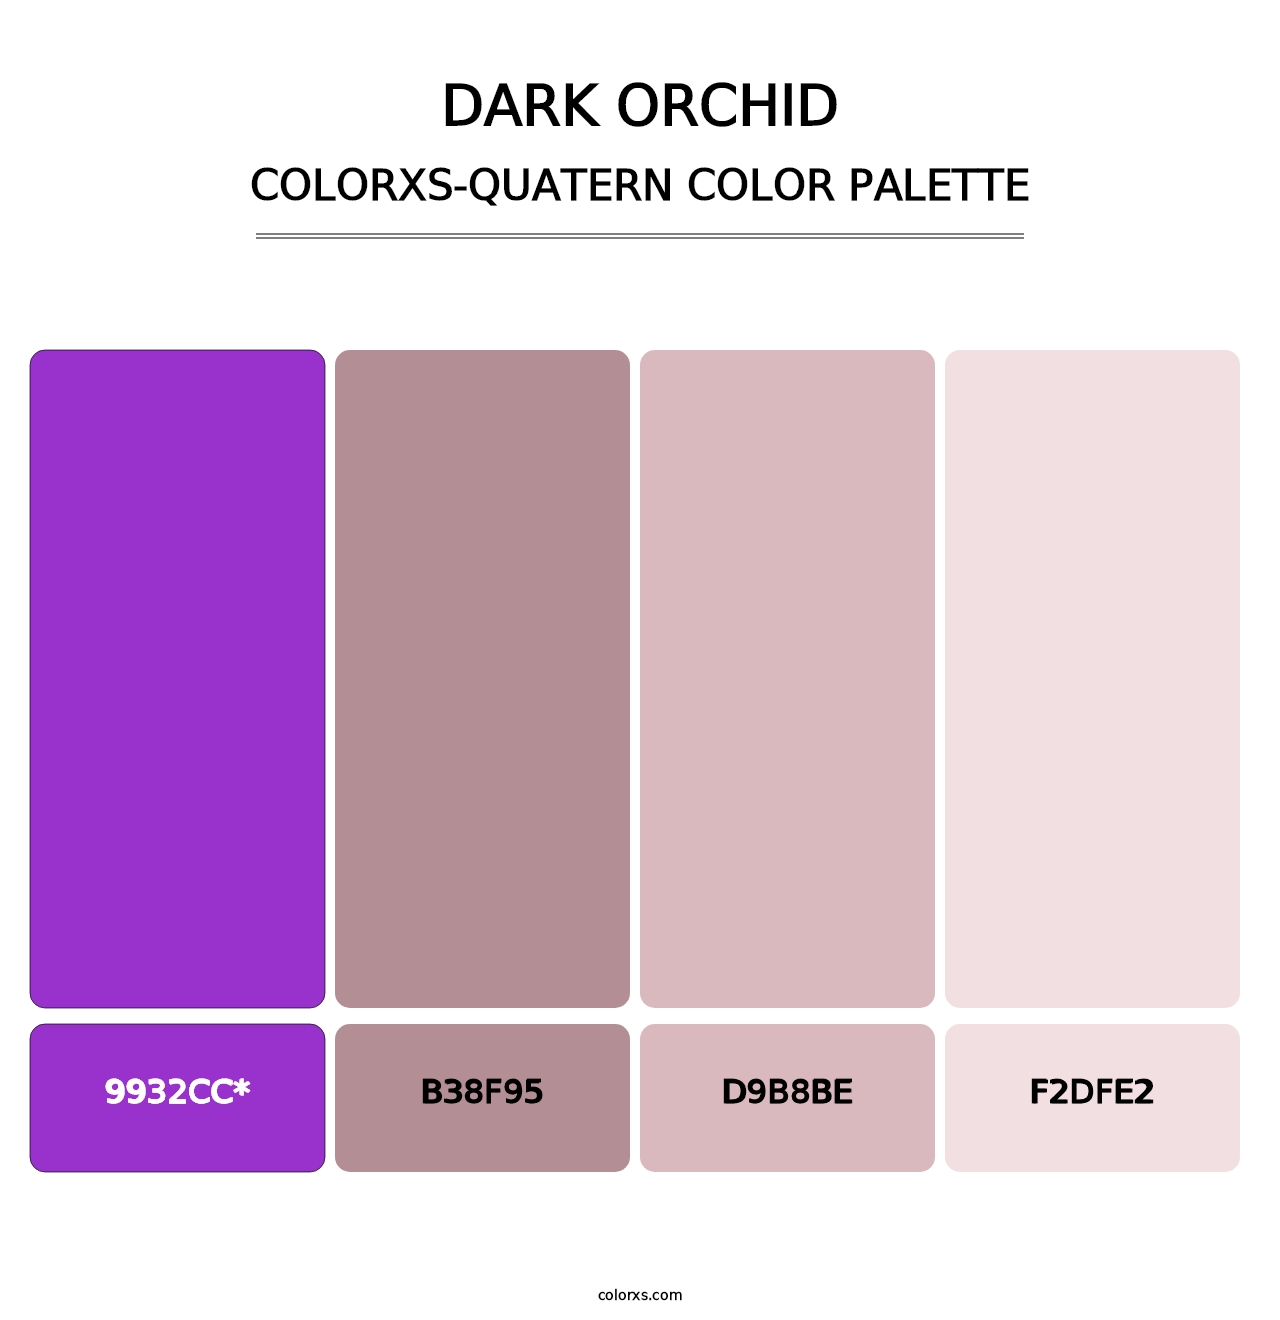 Dark Orchid - Colorxs Quatern Palette